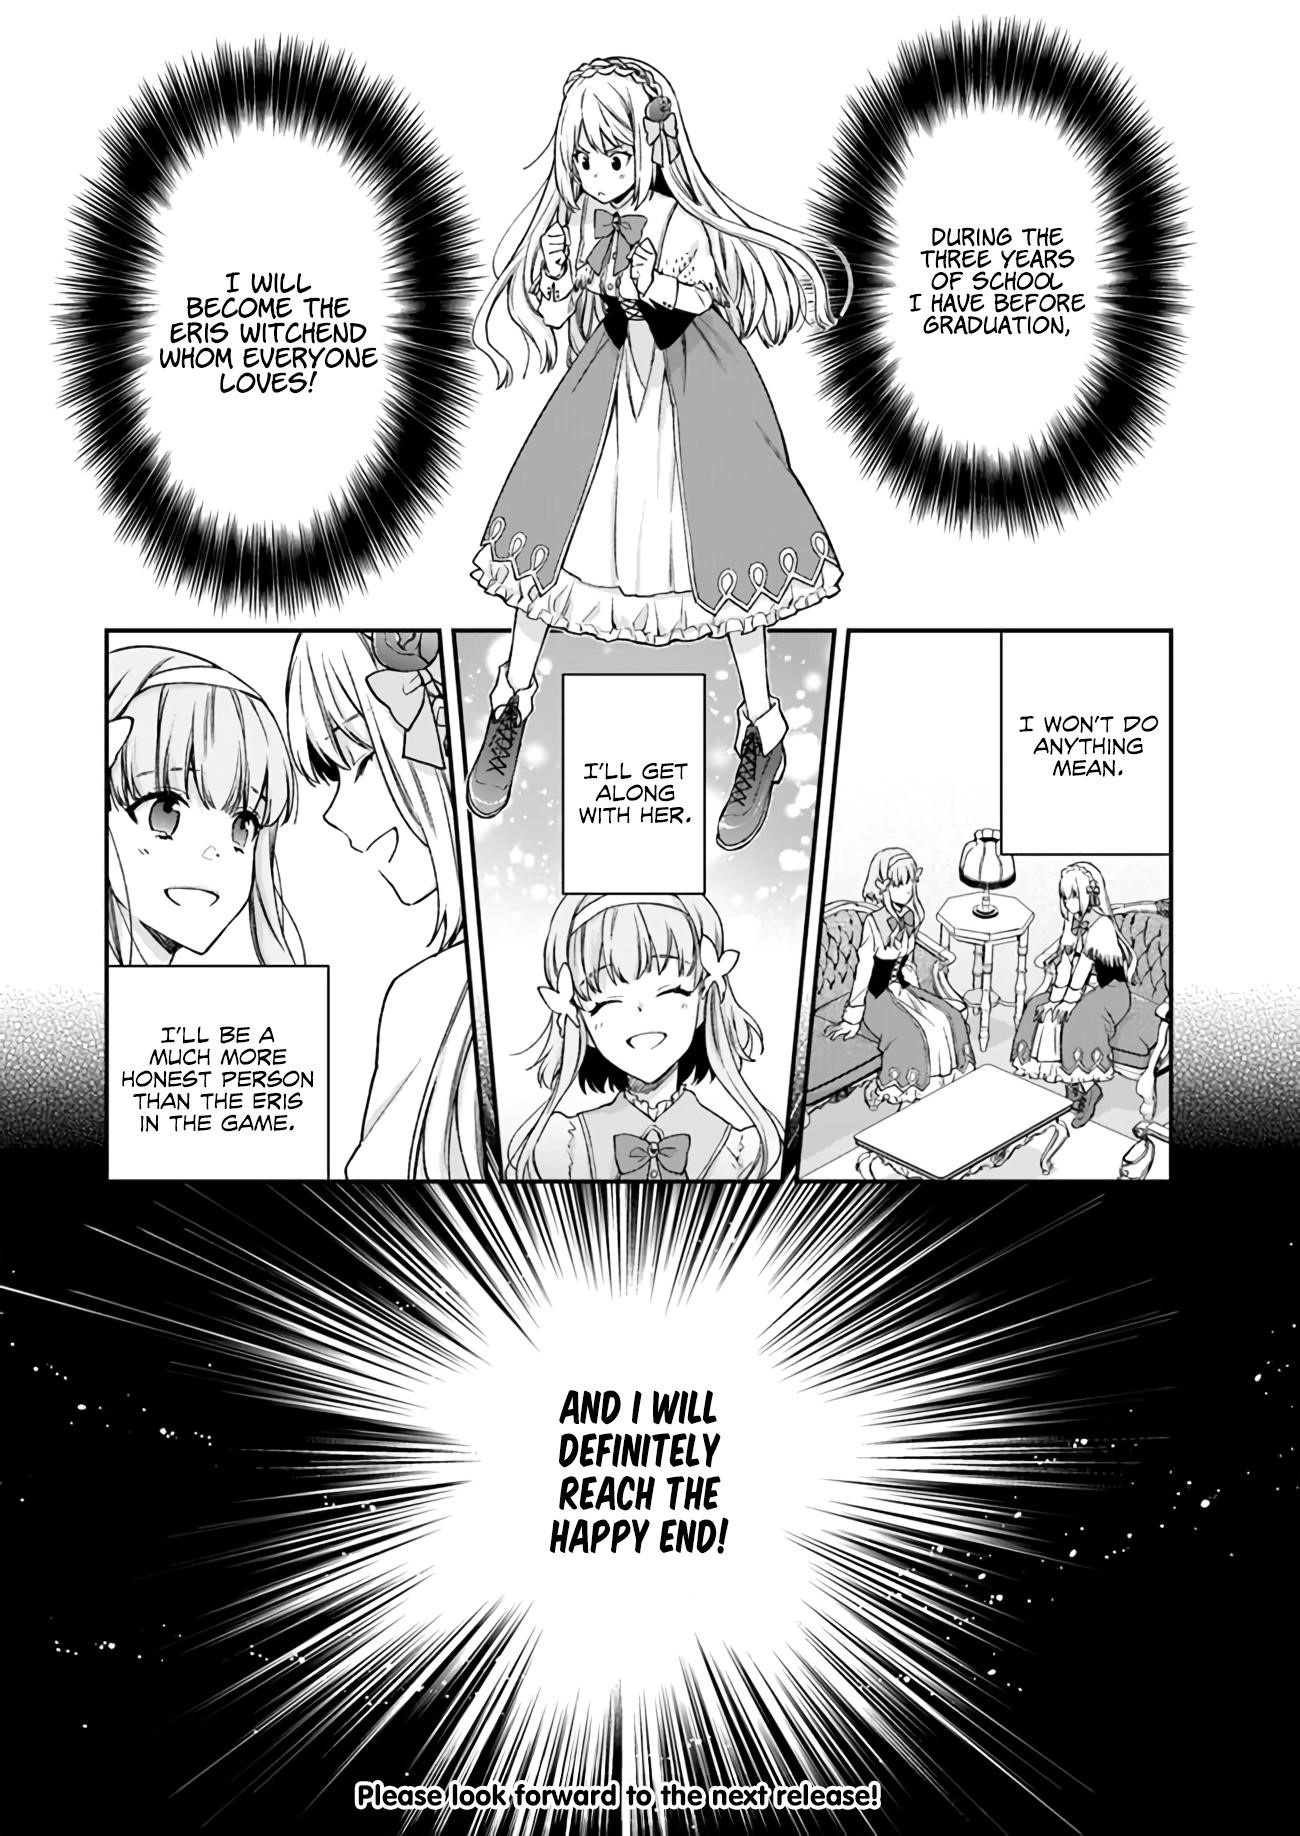 7th loop villainess manga